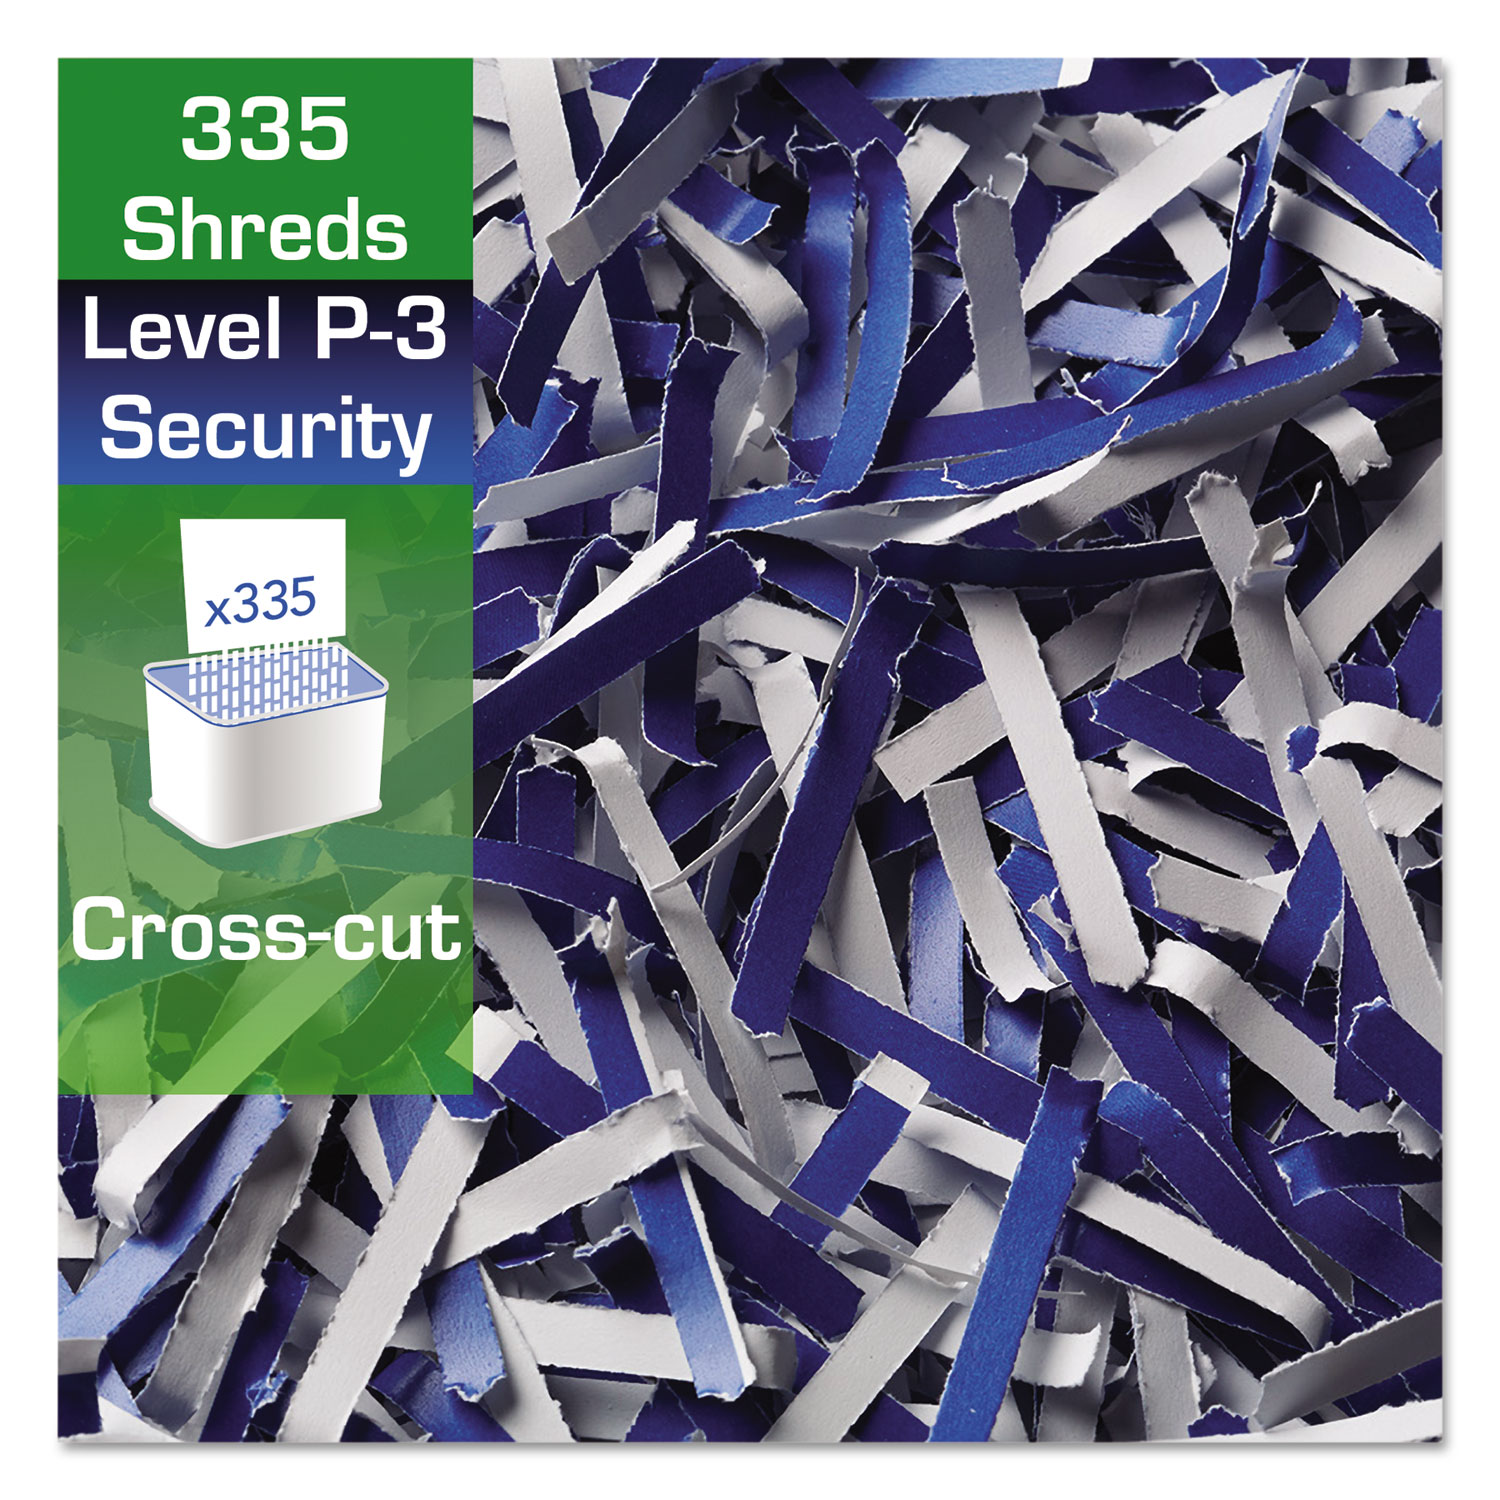 SX16-08 Cross-Cut Jam Free Shredder, 16 Sheets, 1-5 Users